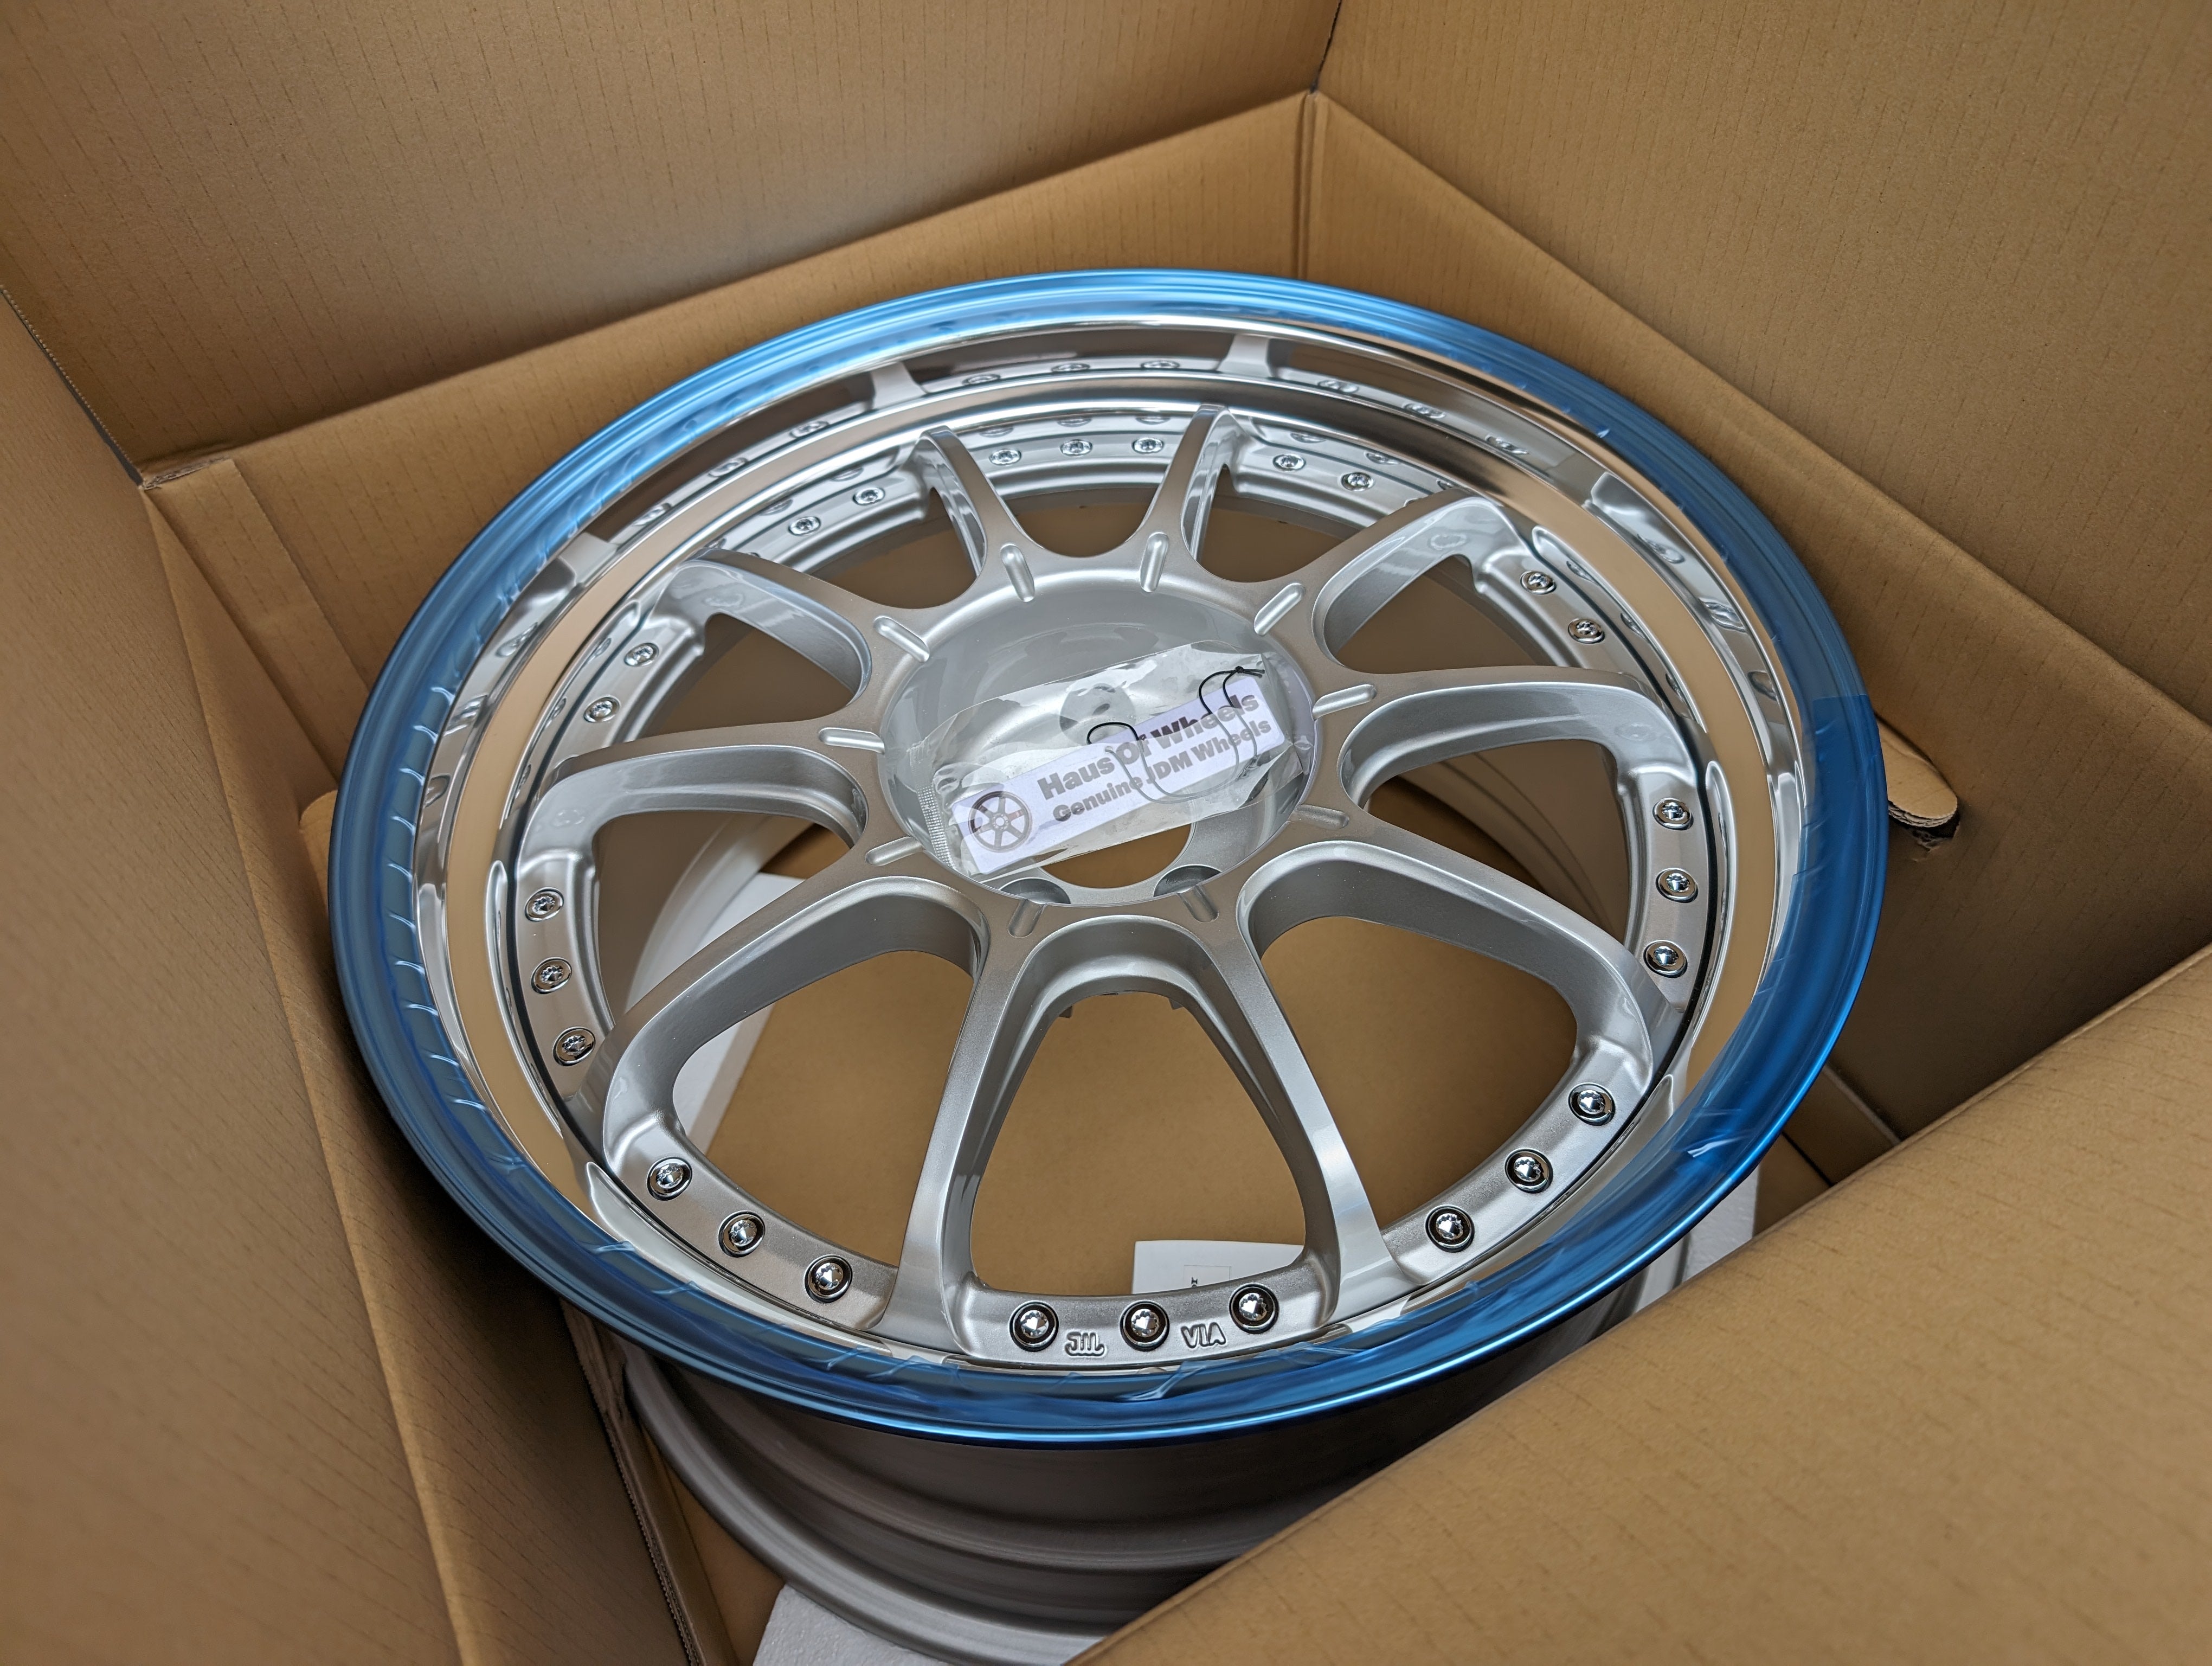 *Brand New* SSR SP5 (High Bright Silver) - 3 Piece Wheels - 5x100 - 18x9.5 +37